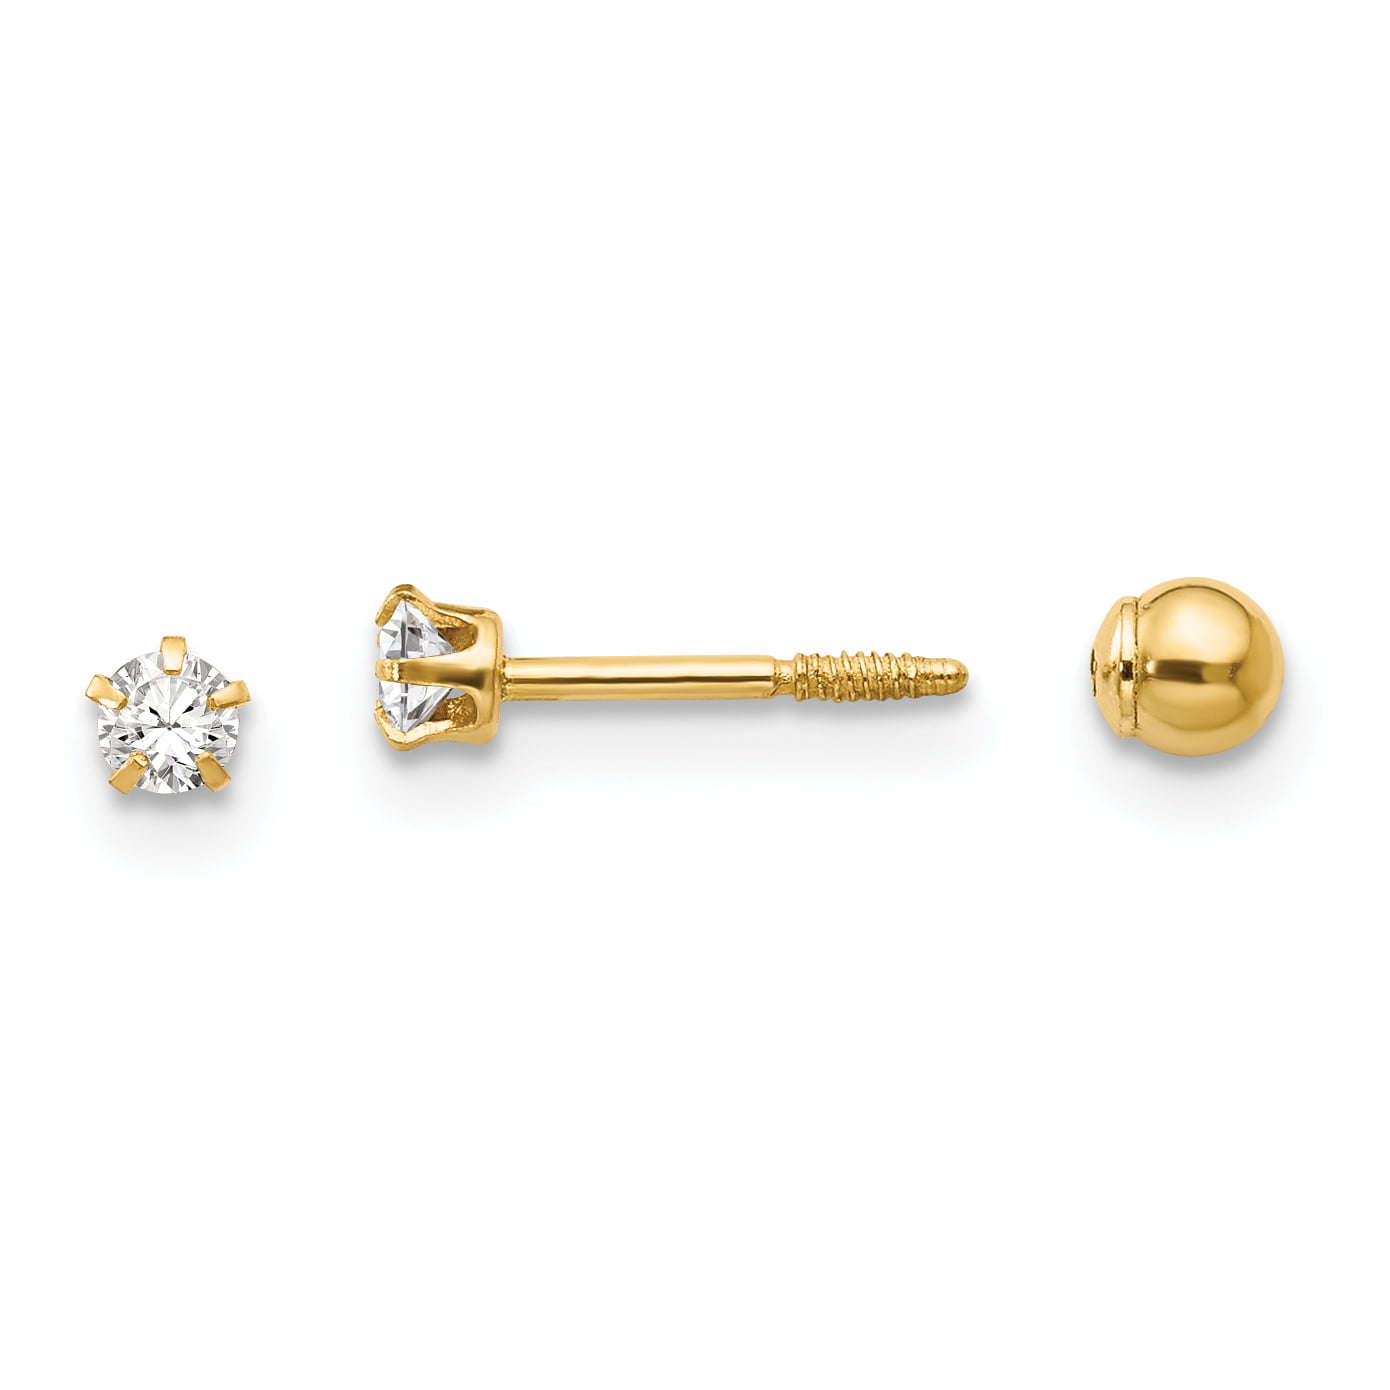 14K Yellow Gold 3mm FCW Pearl Reversible Ball Stud Earrings Madi K Kid's Jewelry 